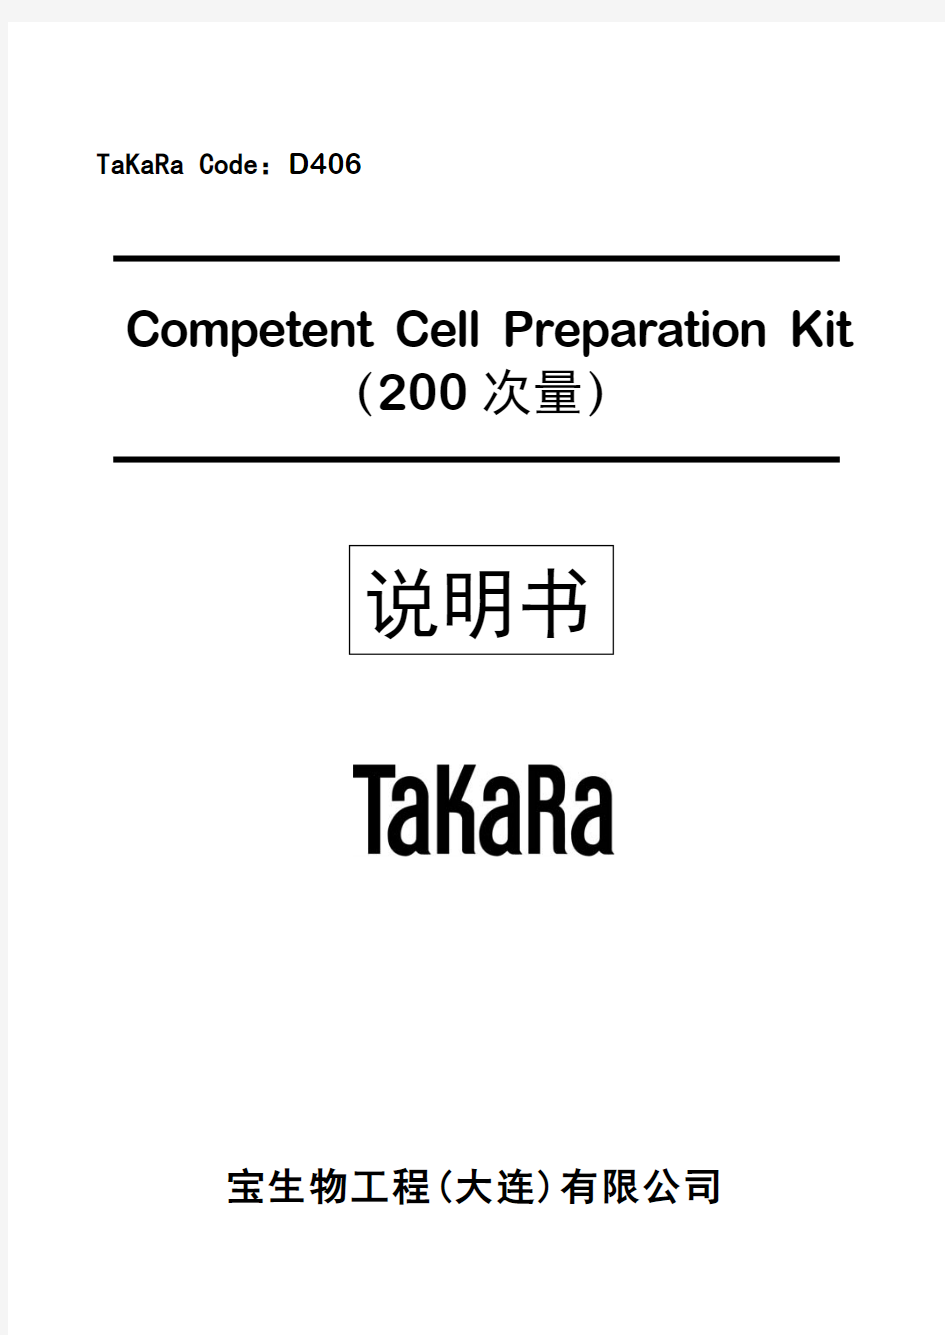 Takara 感受态制备试剂盒说明书